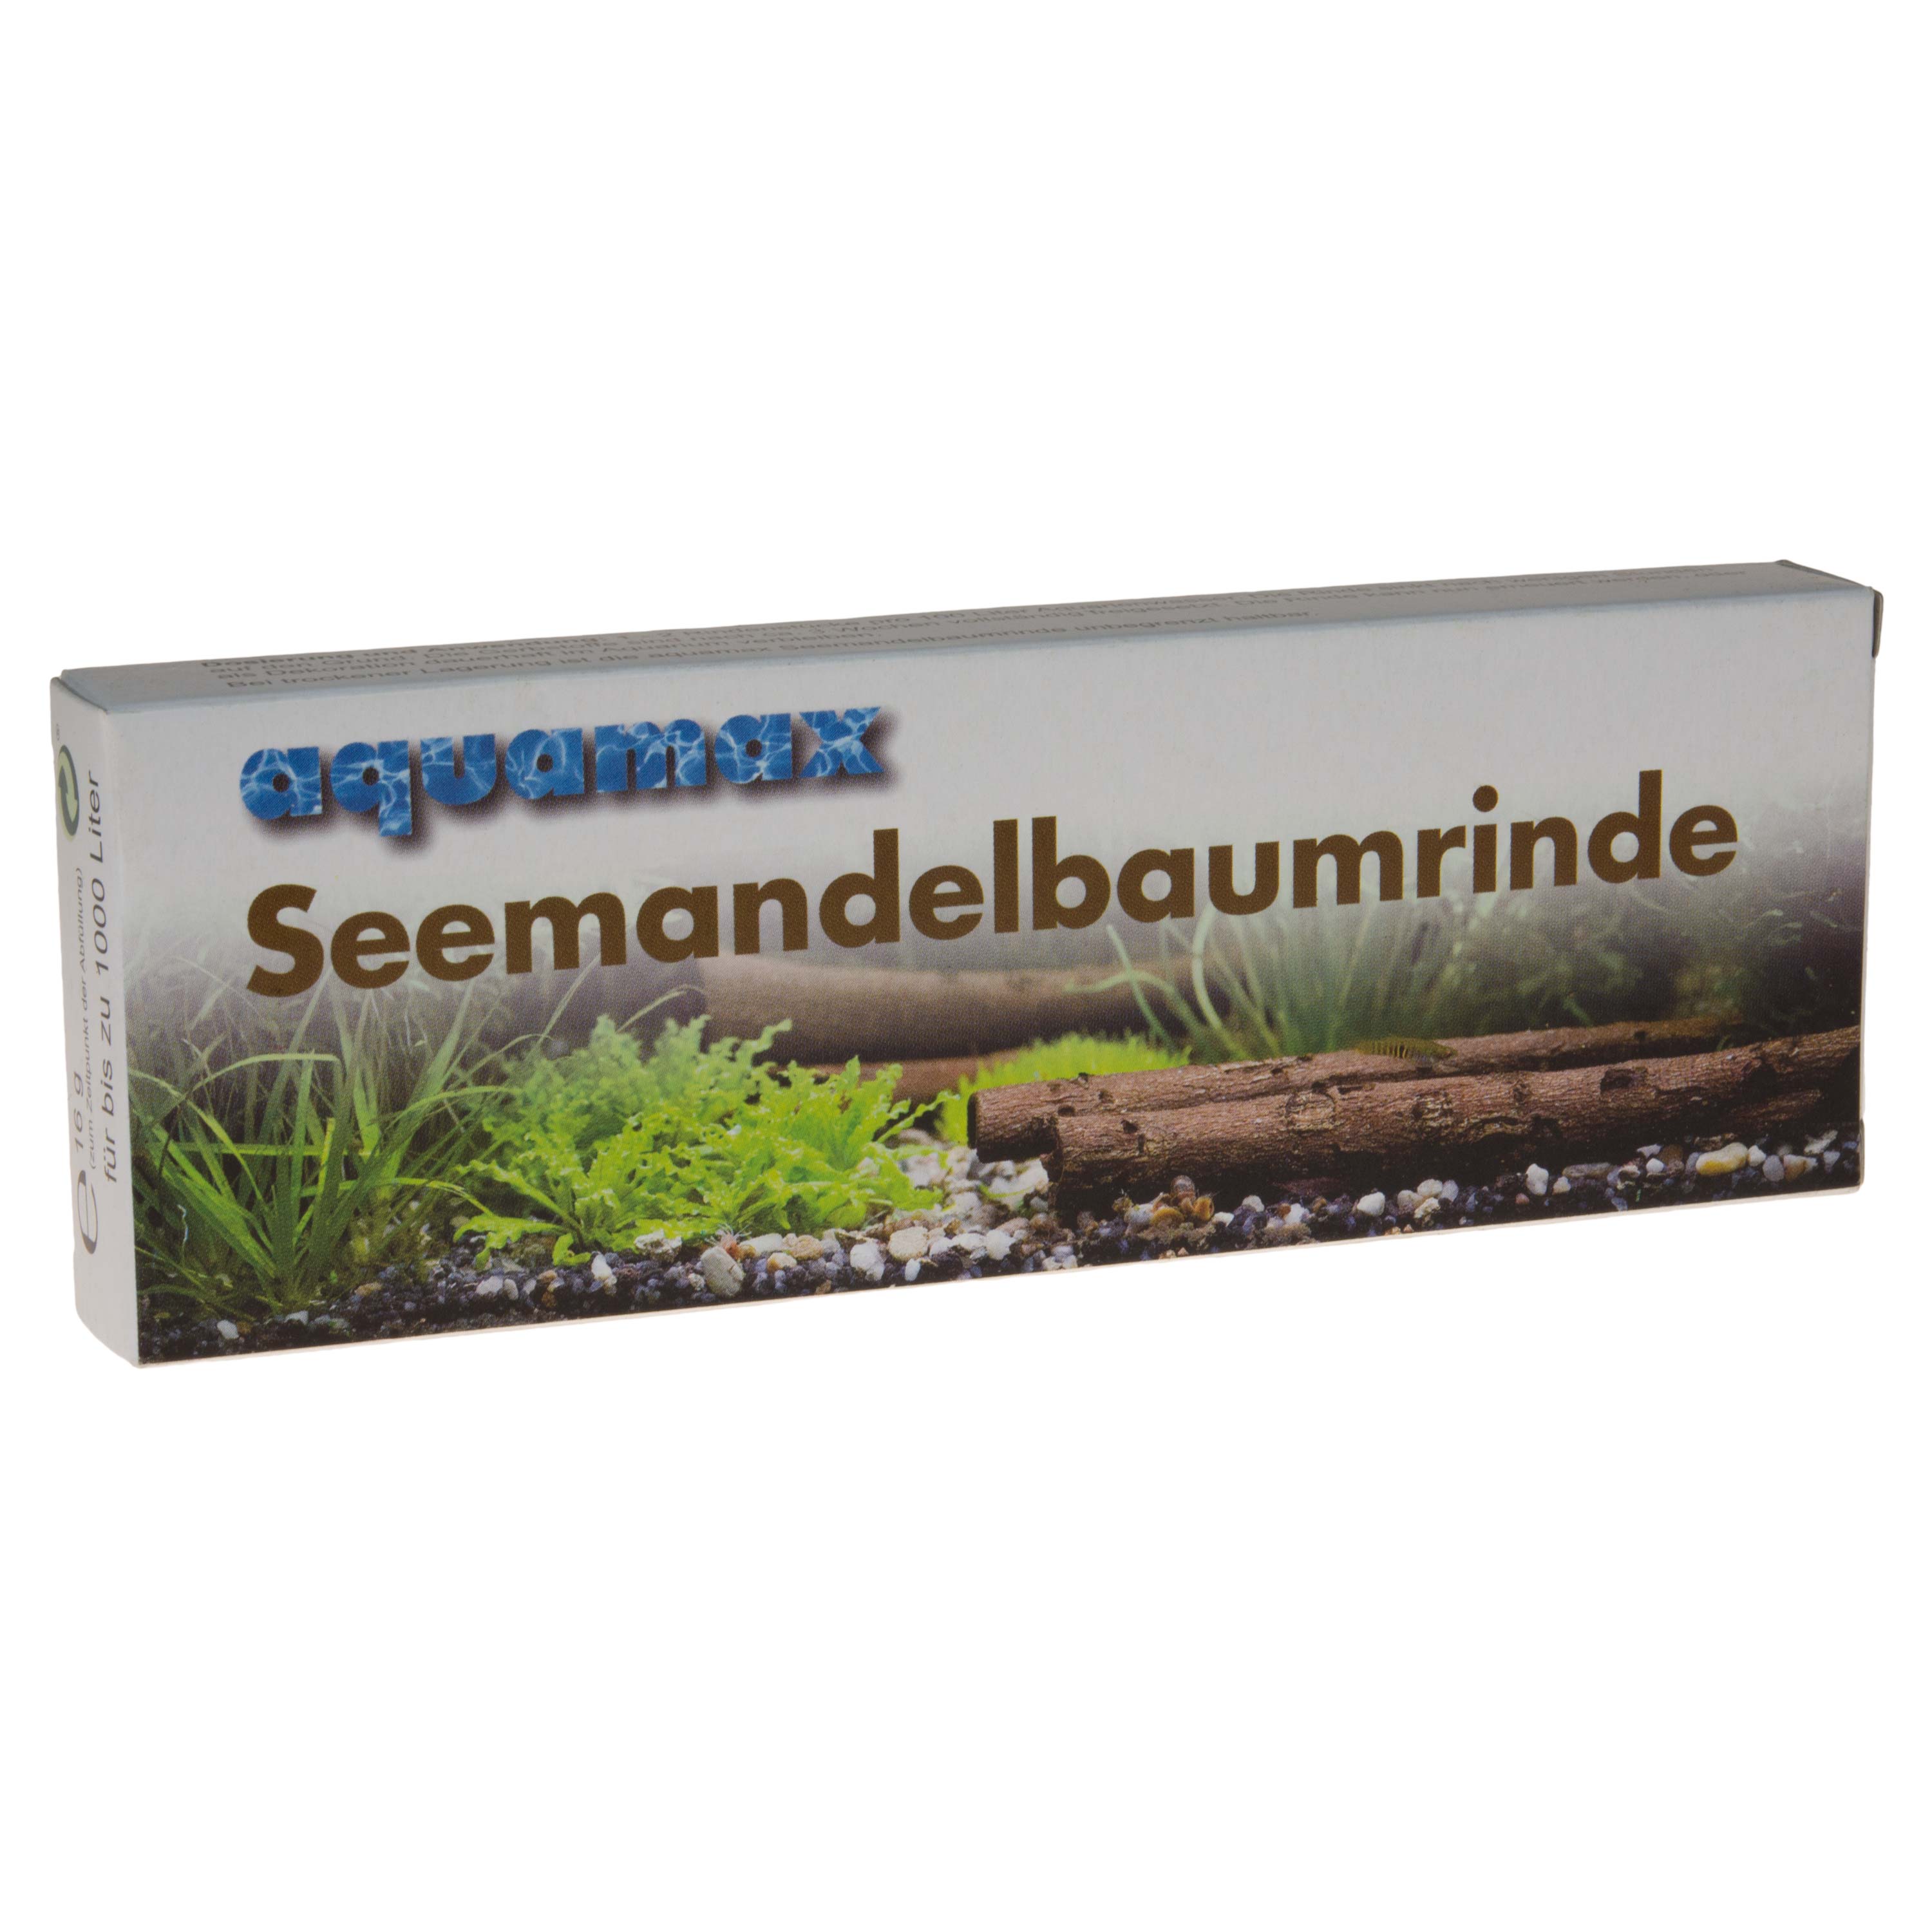 Standard Seemandelbaumrinde aquamax